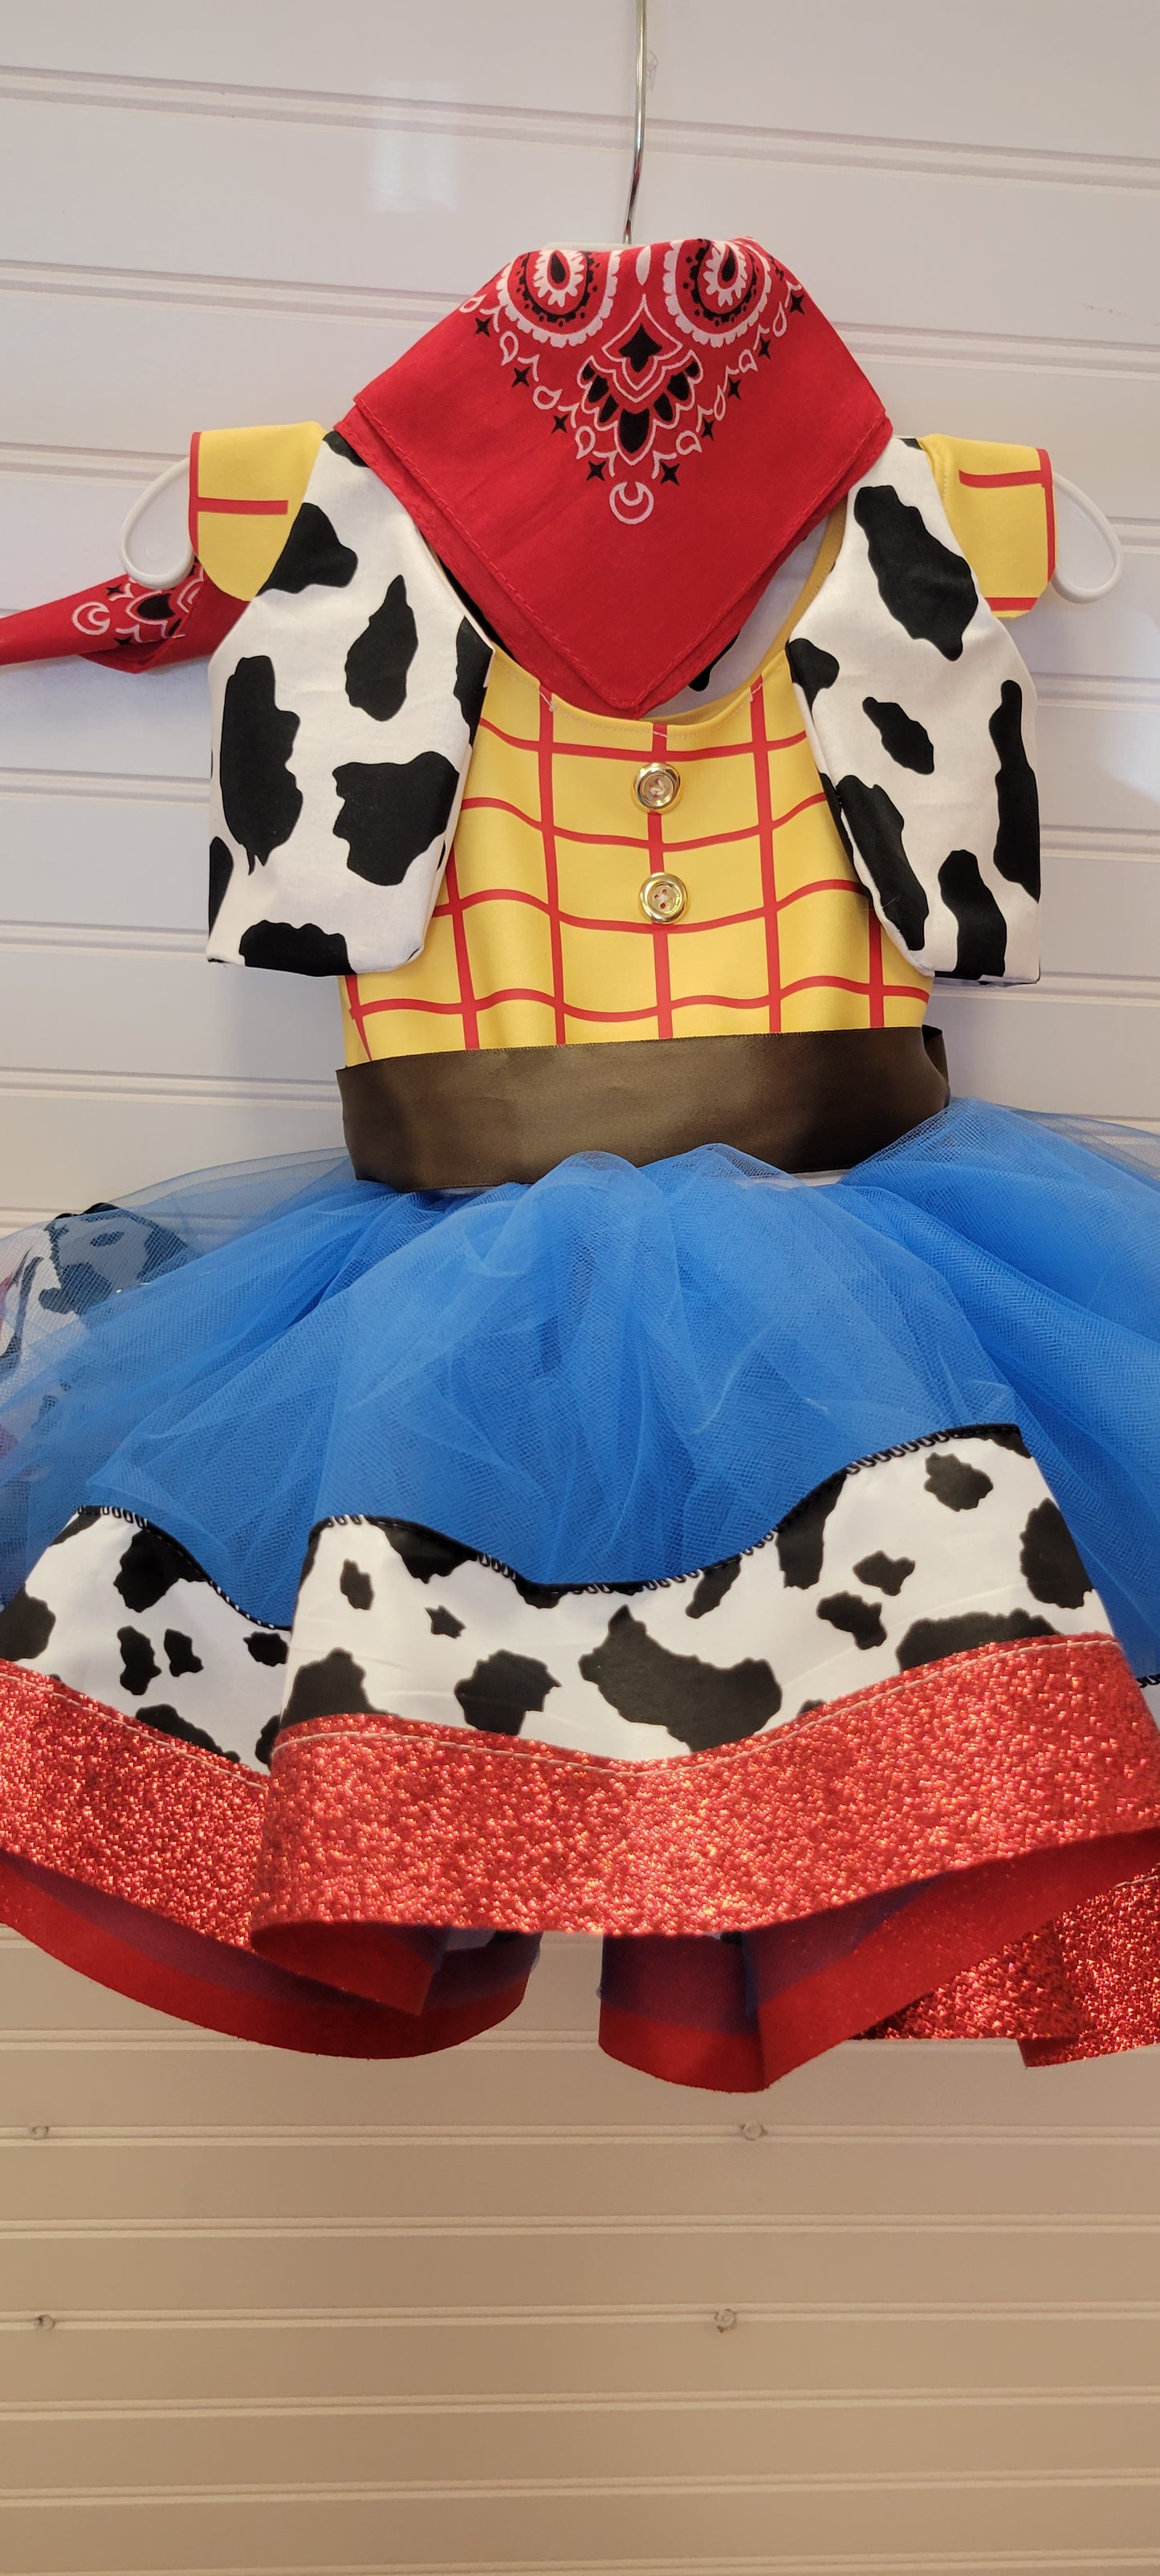 Jessie Toy Story inspired Birthday dress